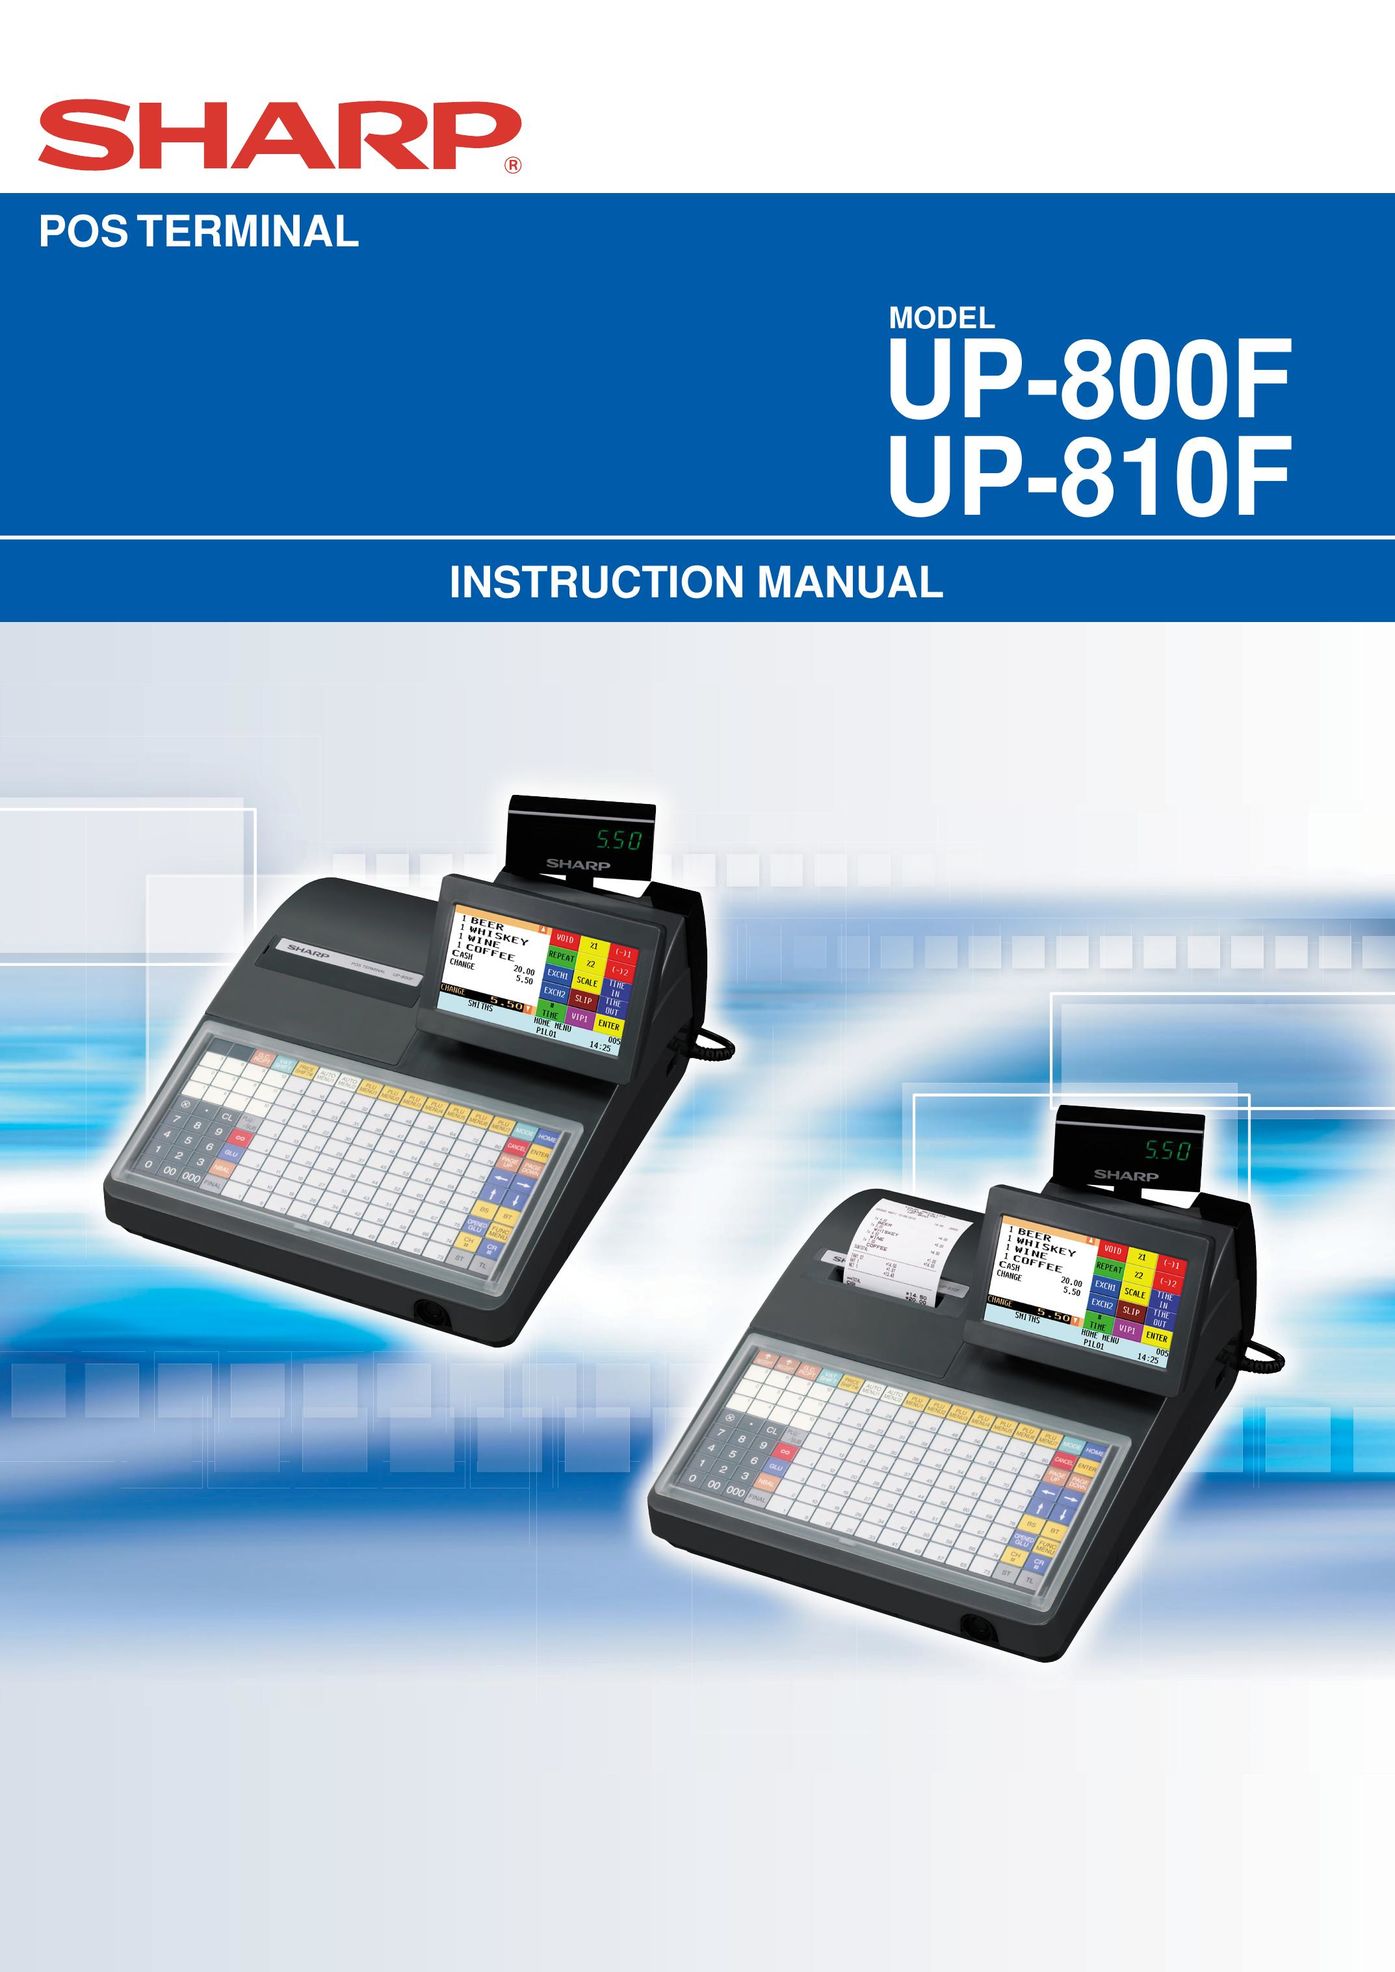 Sharp UP-810F Cash Register User Manual